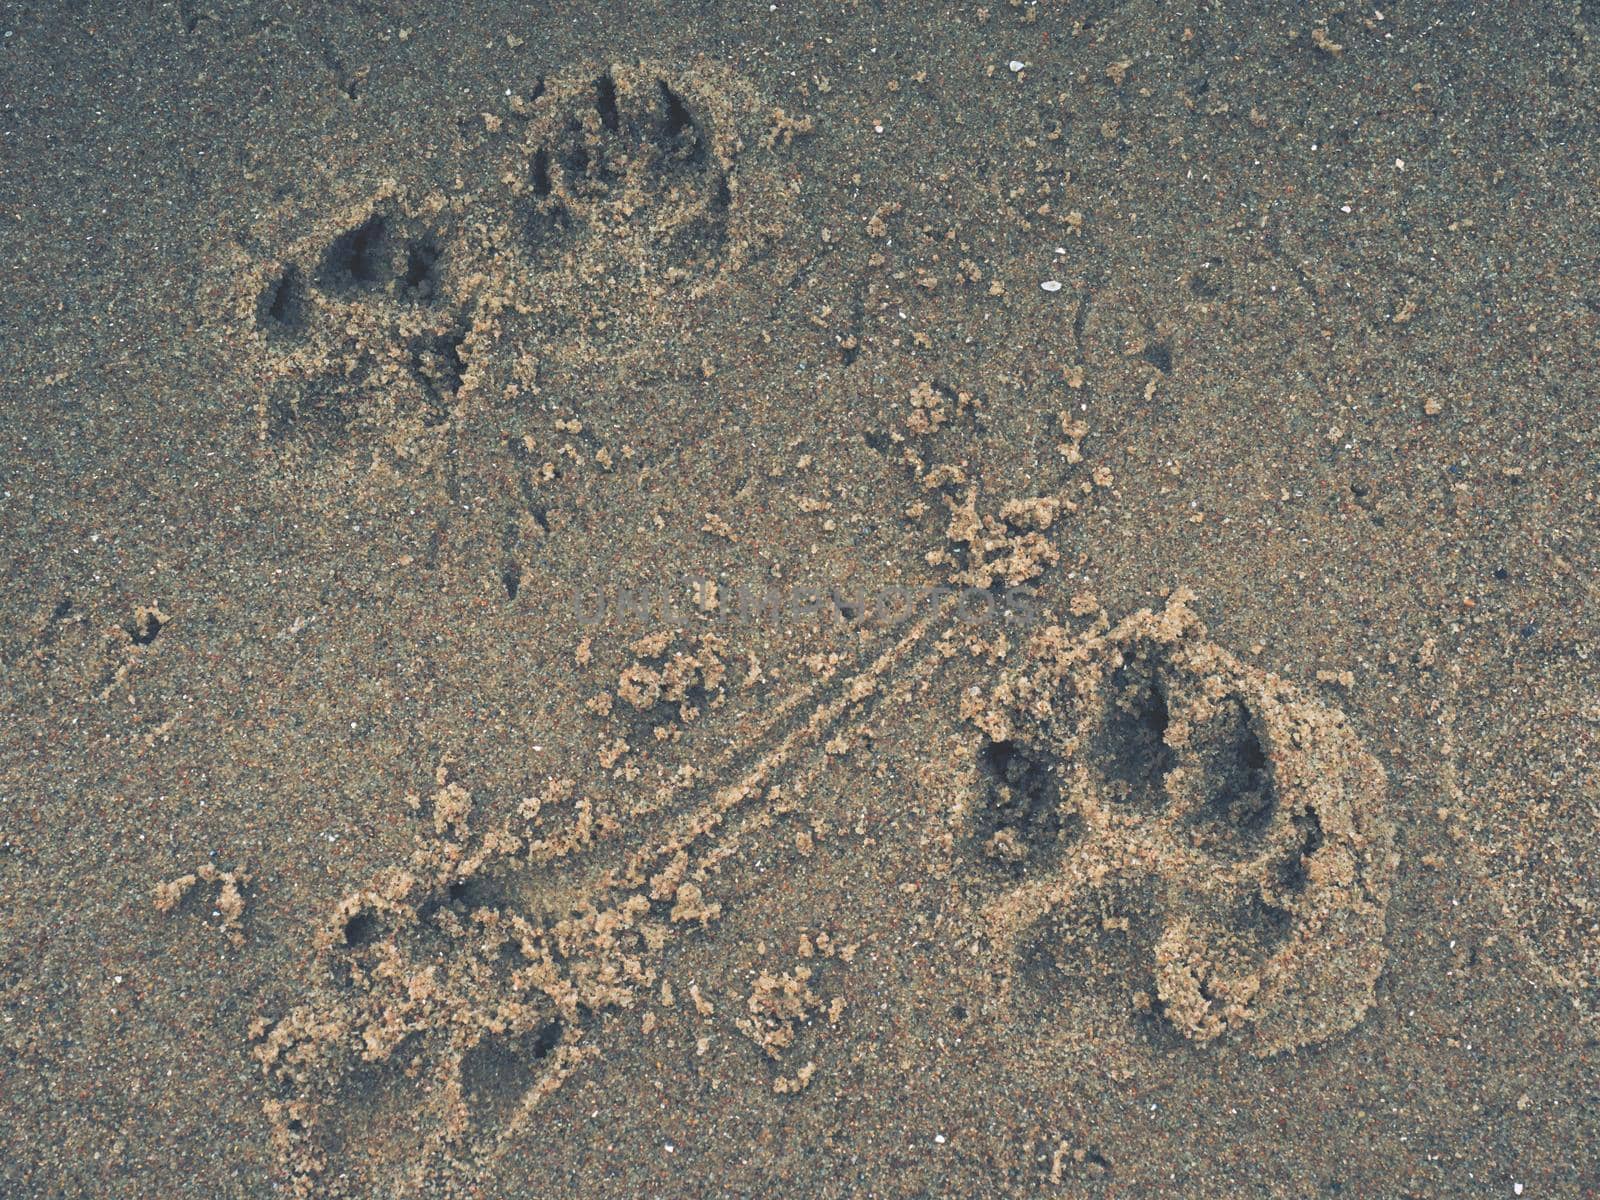 Footprint and animal prints in beach  sand. by rdonar2